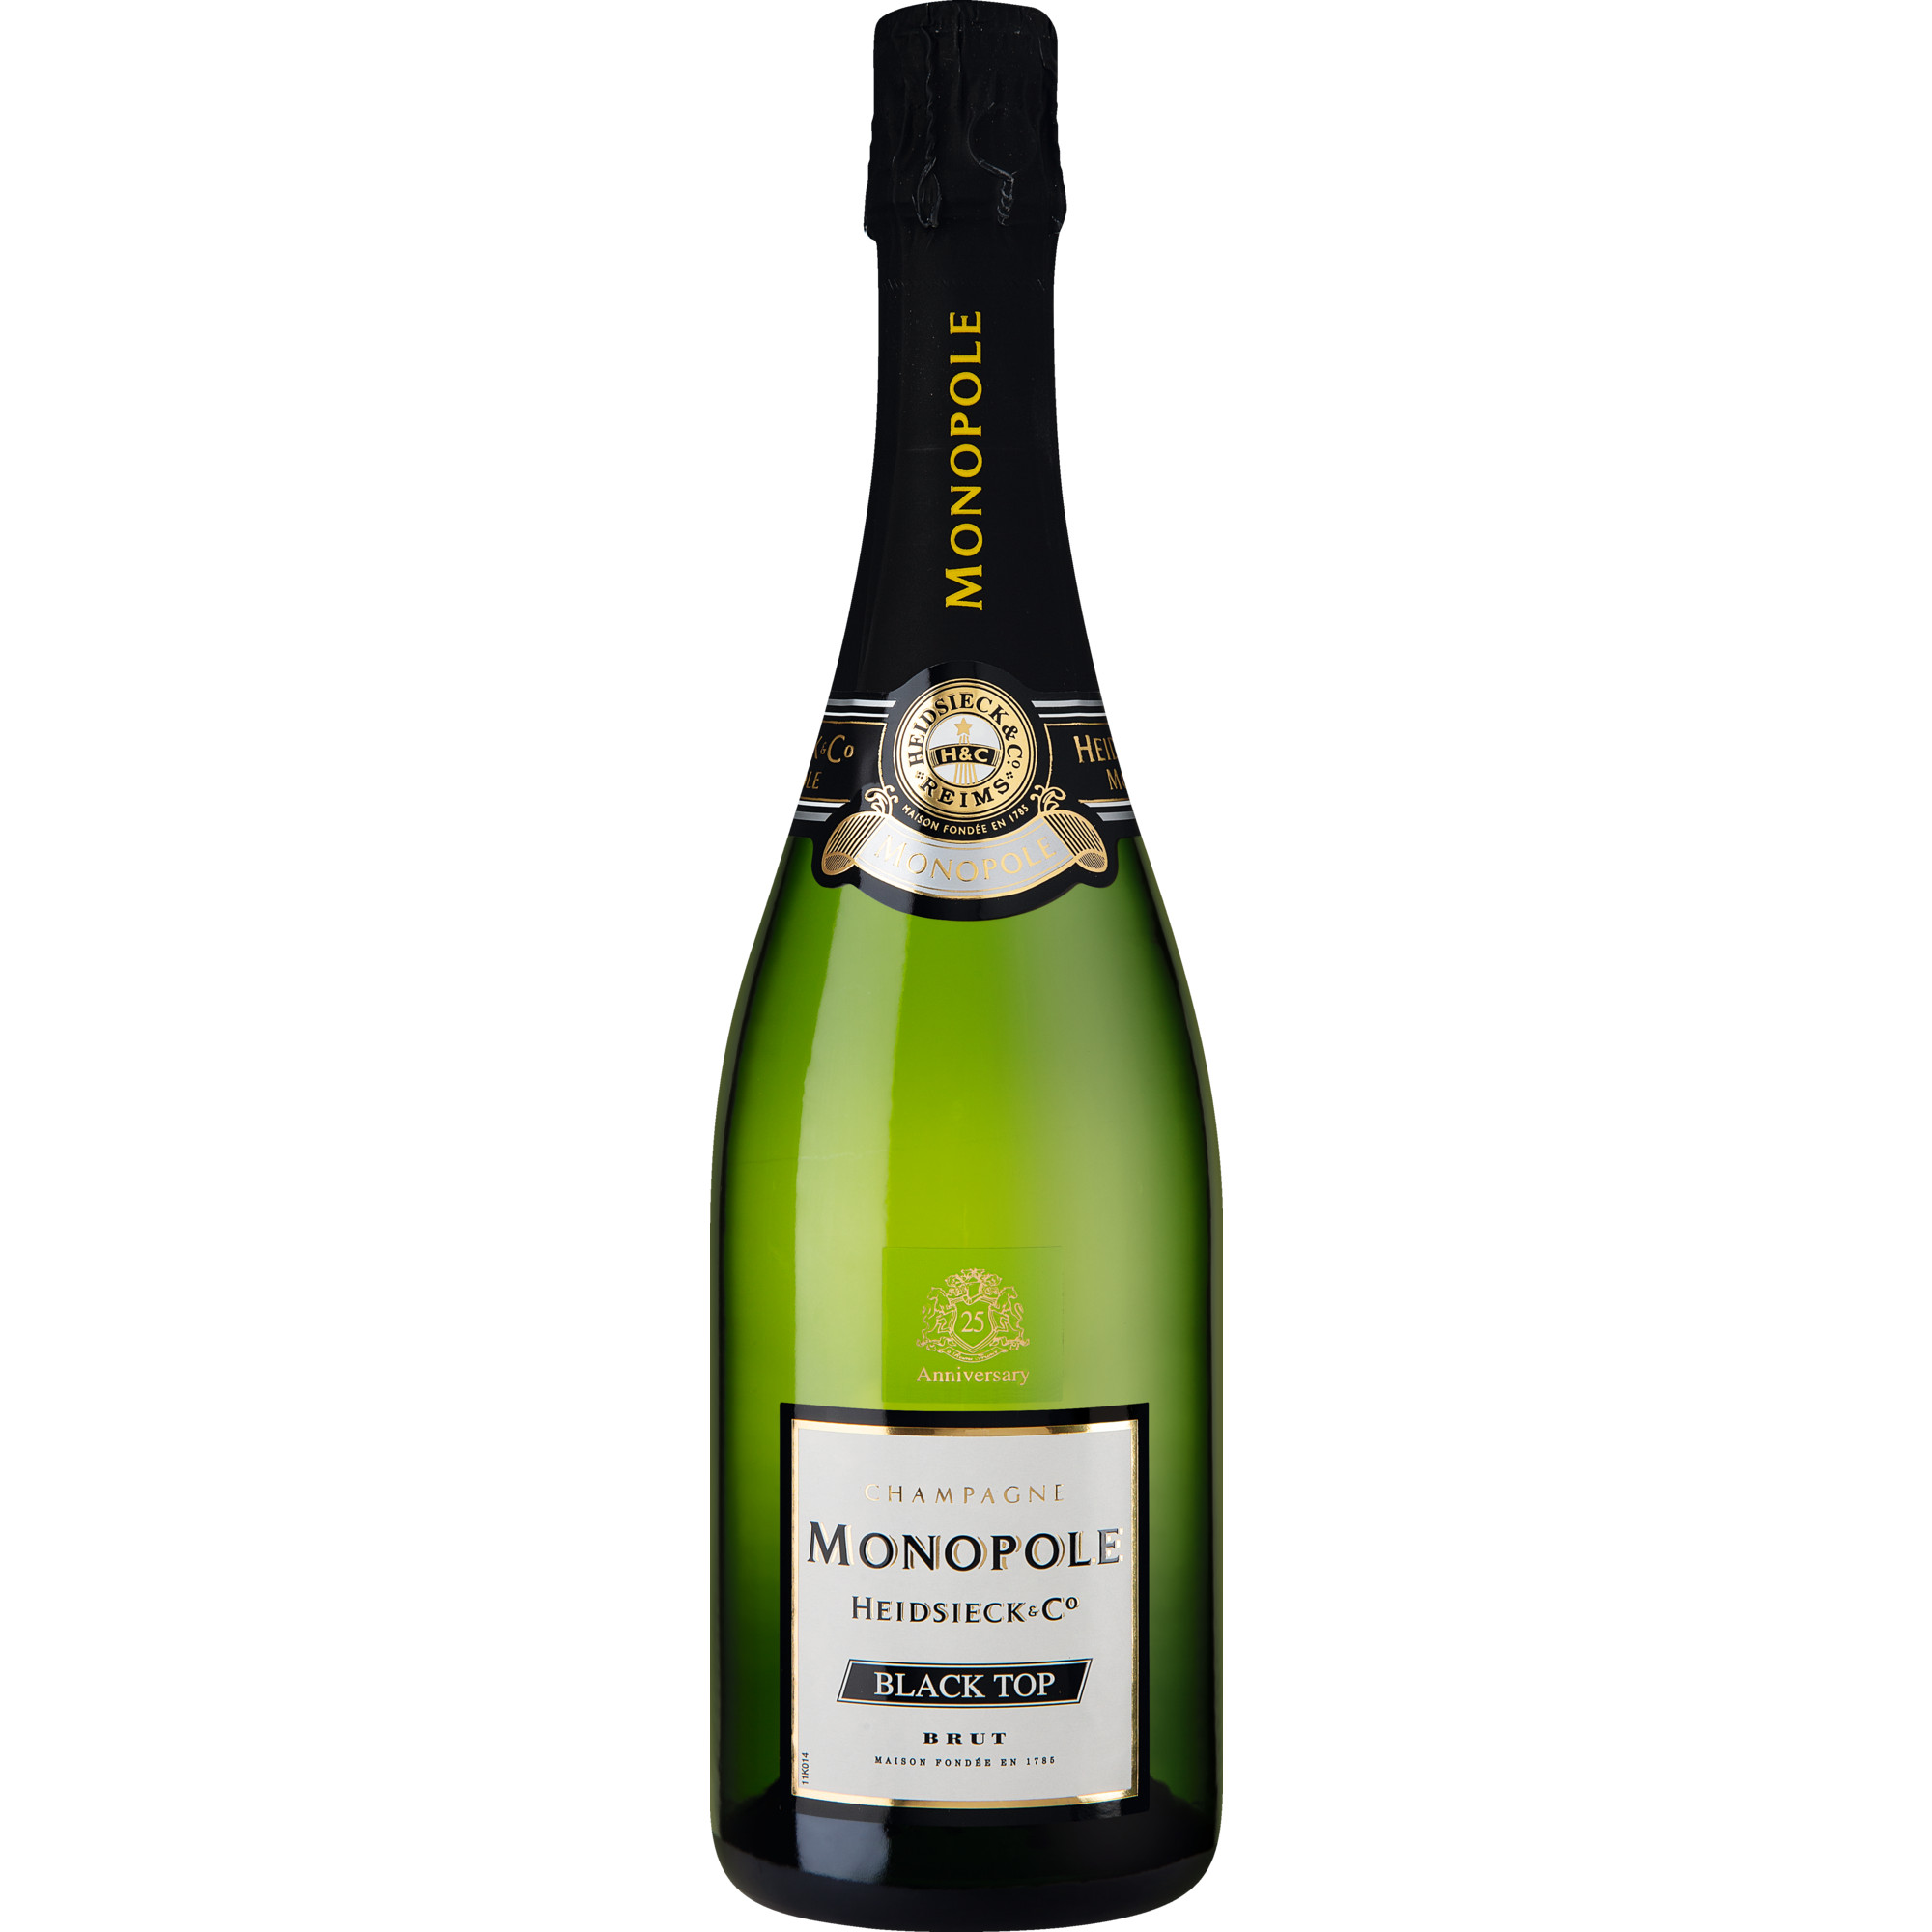 Champagne Heidsieck Anniversary Black Top, Brut, Champagne AC, Champagne, Schaumwein Heidsieck & Co. Monopole, 51100 Reims, France Hawesko DE